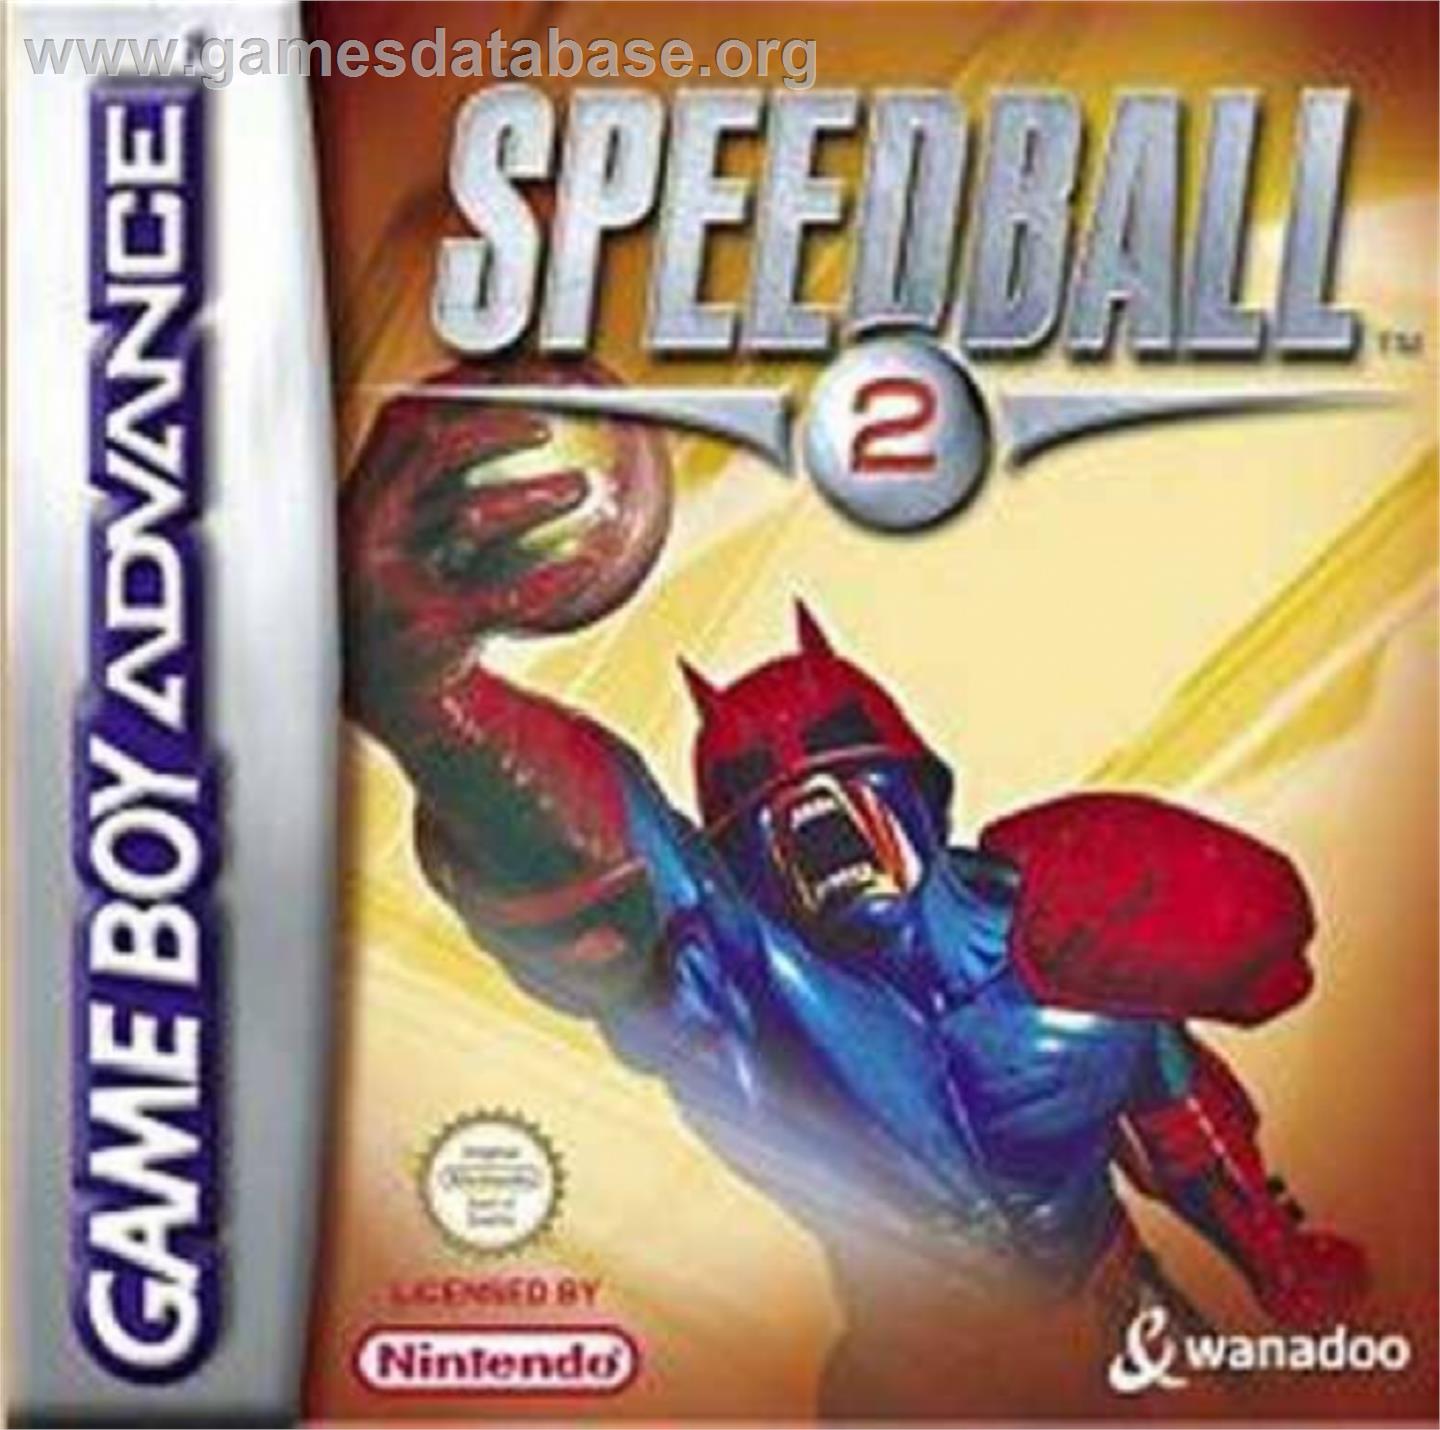 Speedball 2: Brutal Deluxe - Nintendo Game Boy Advance - Artwork - Box